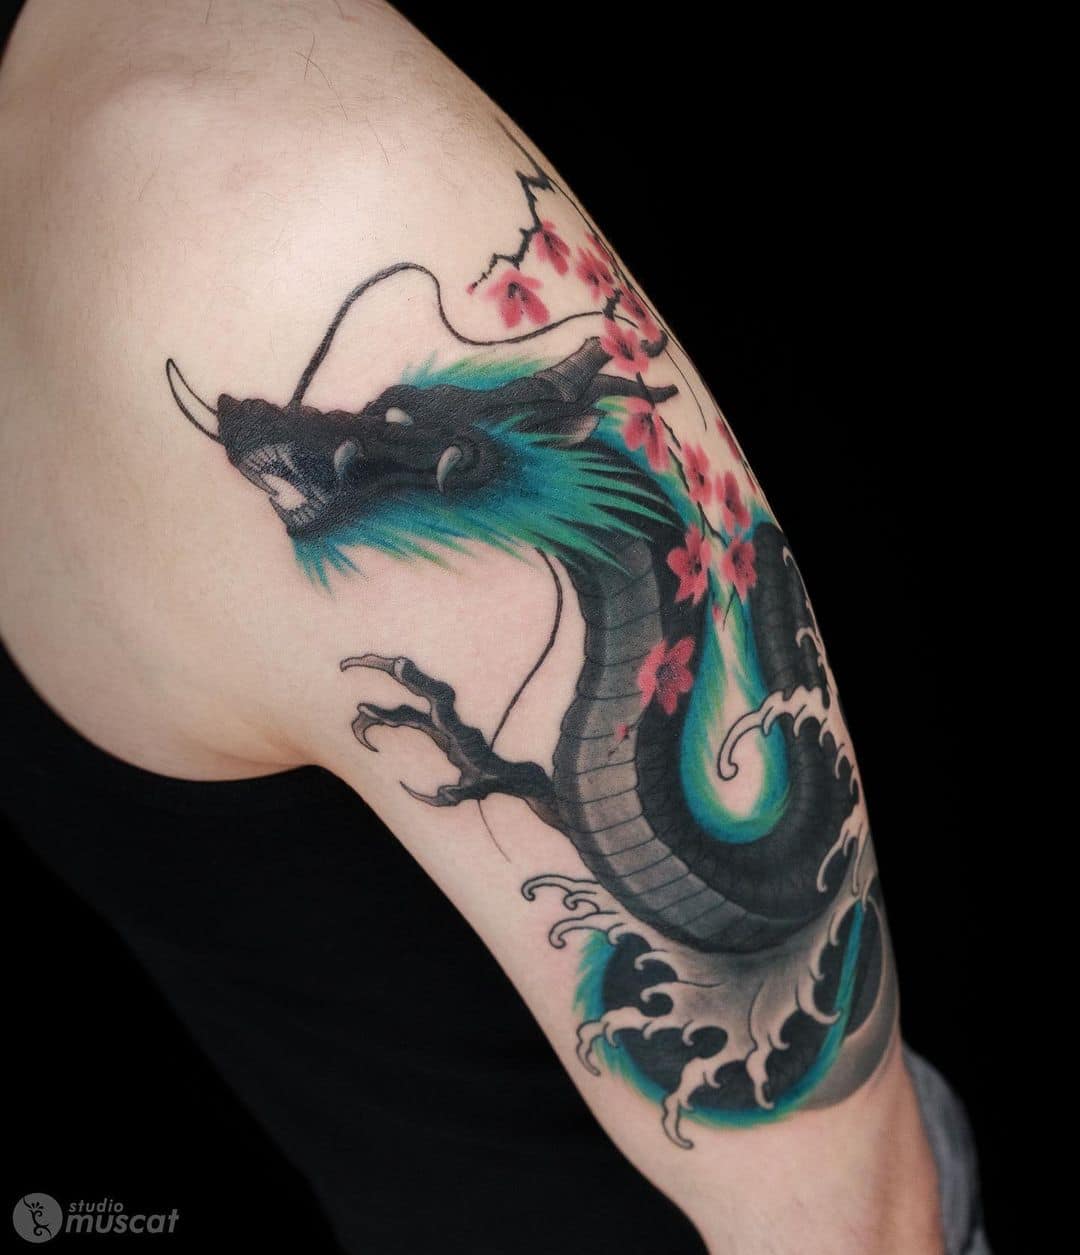 Tatuaje de flor y dragón japonés 2